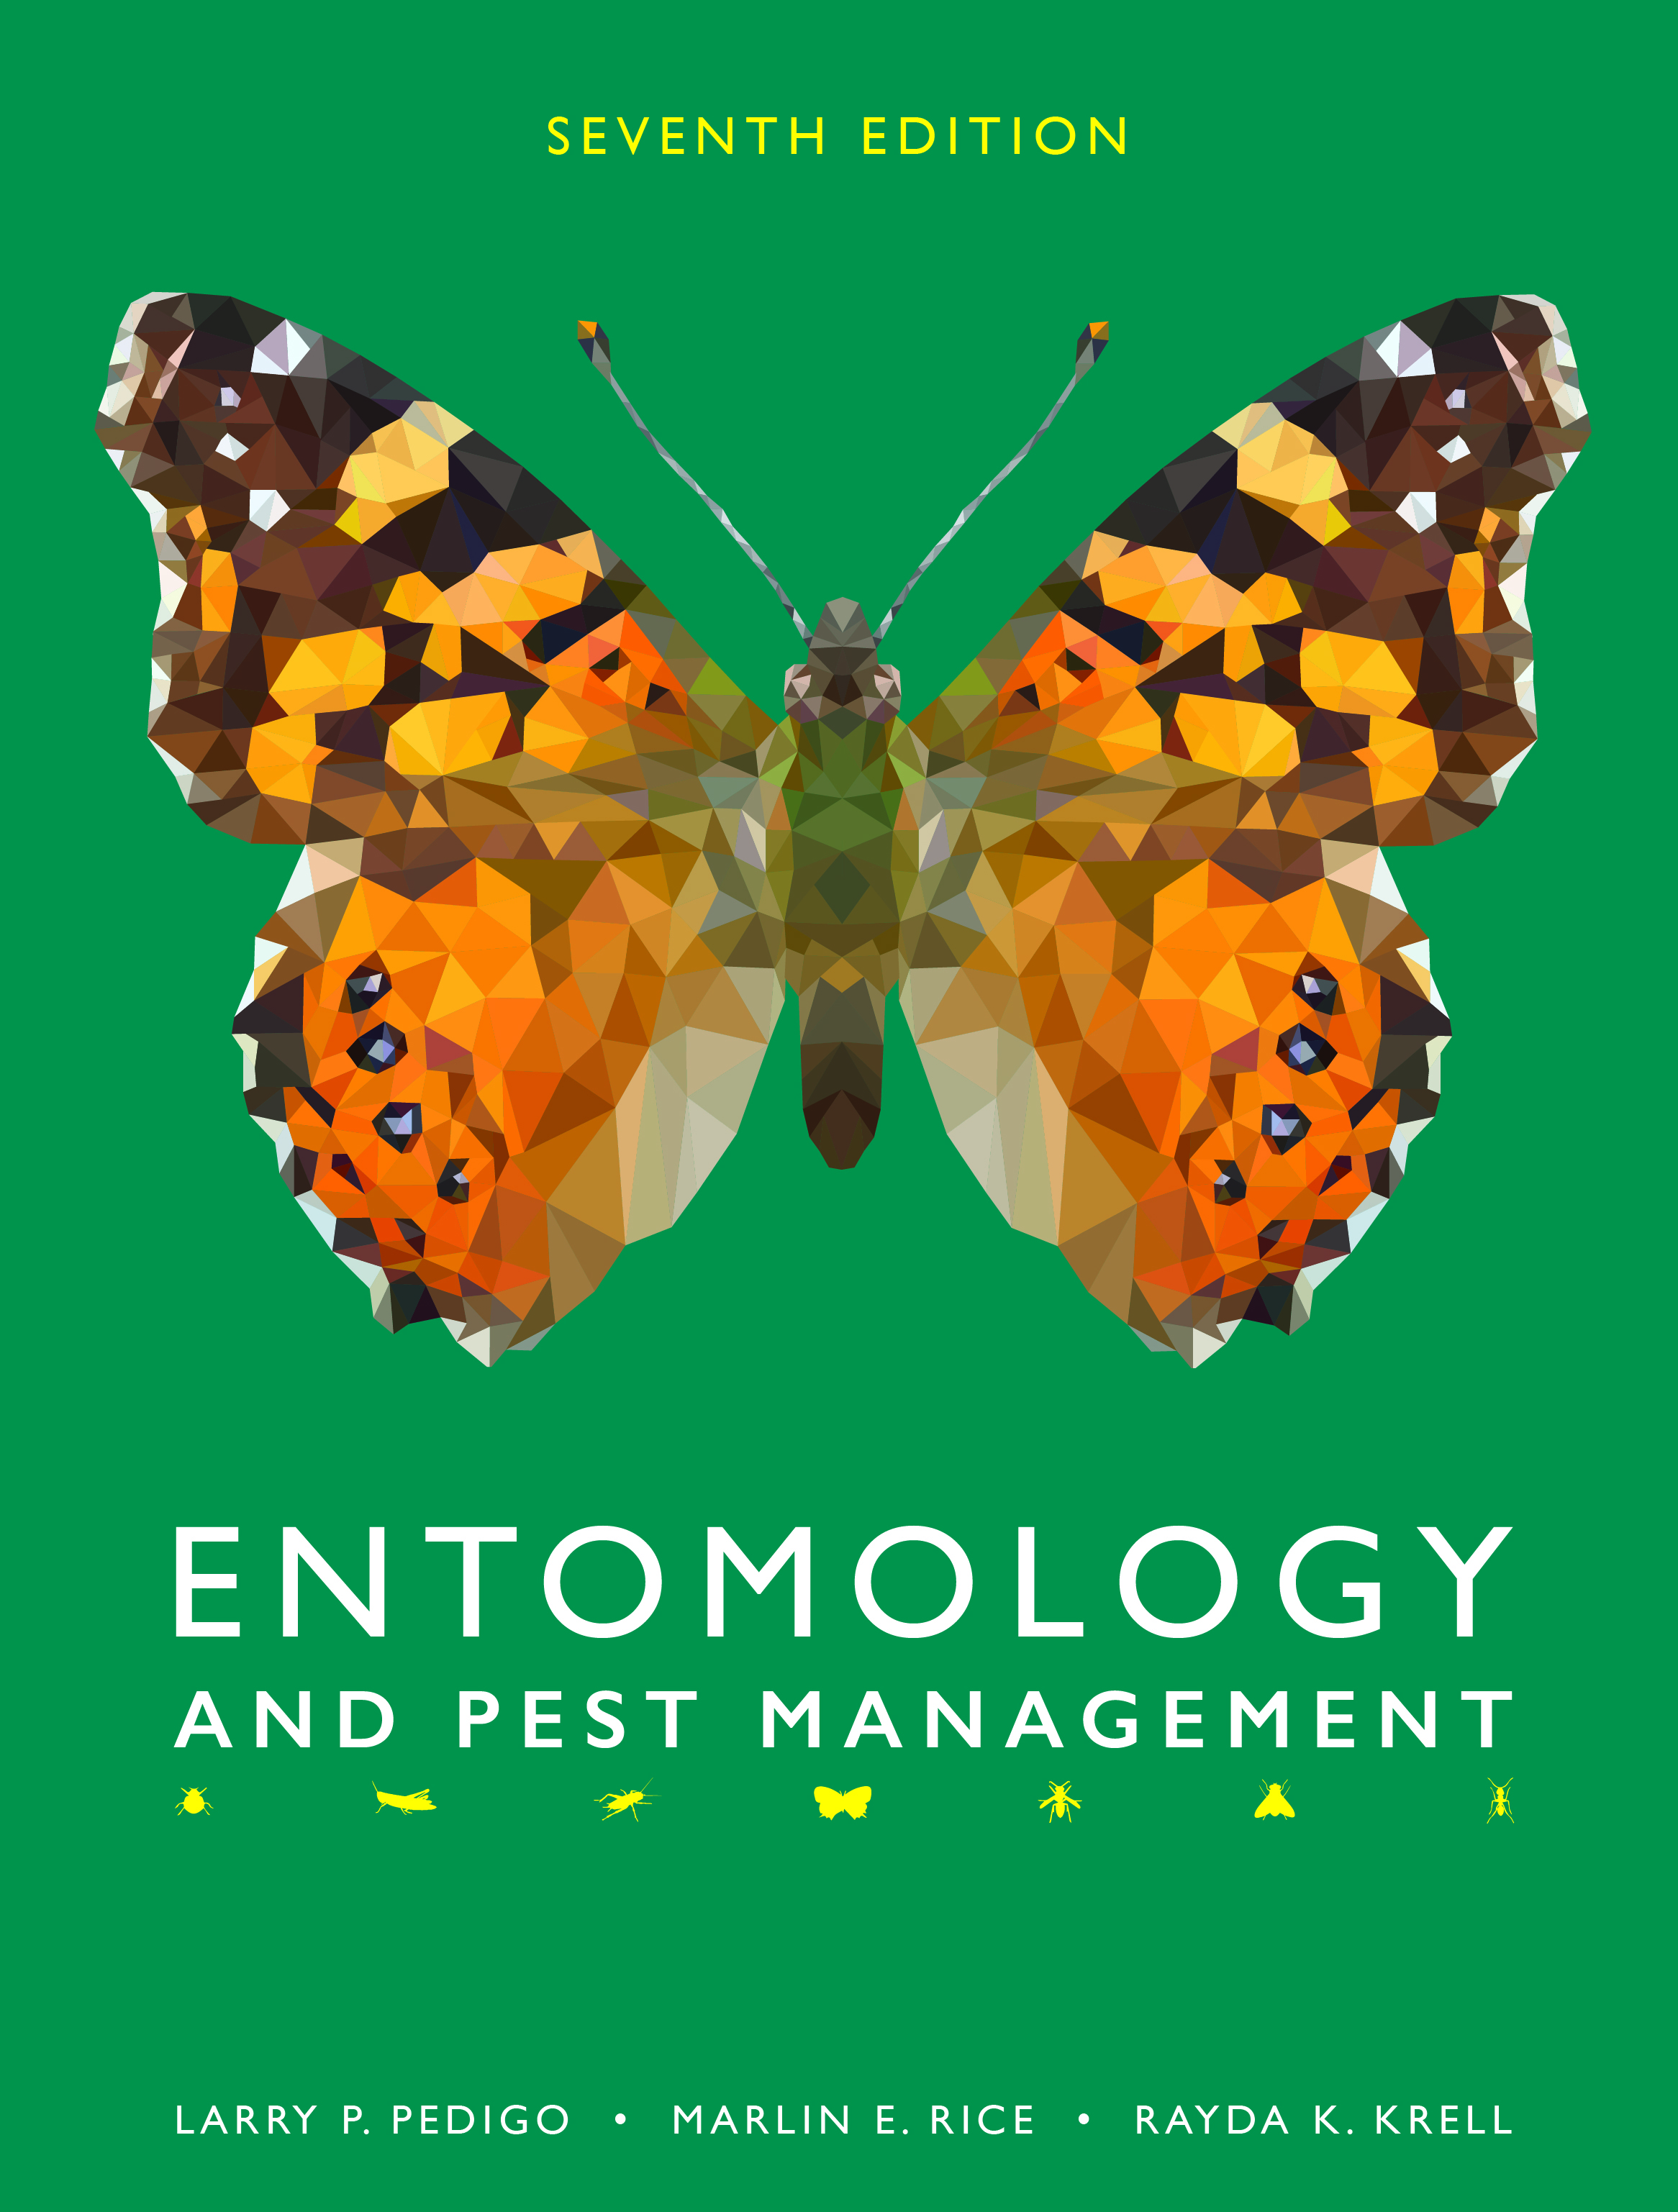 Entomology and Pest Management: Seventh Edition by Larry P. Pedigo, Marlin E. Rice, Rayda K. Krell